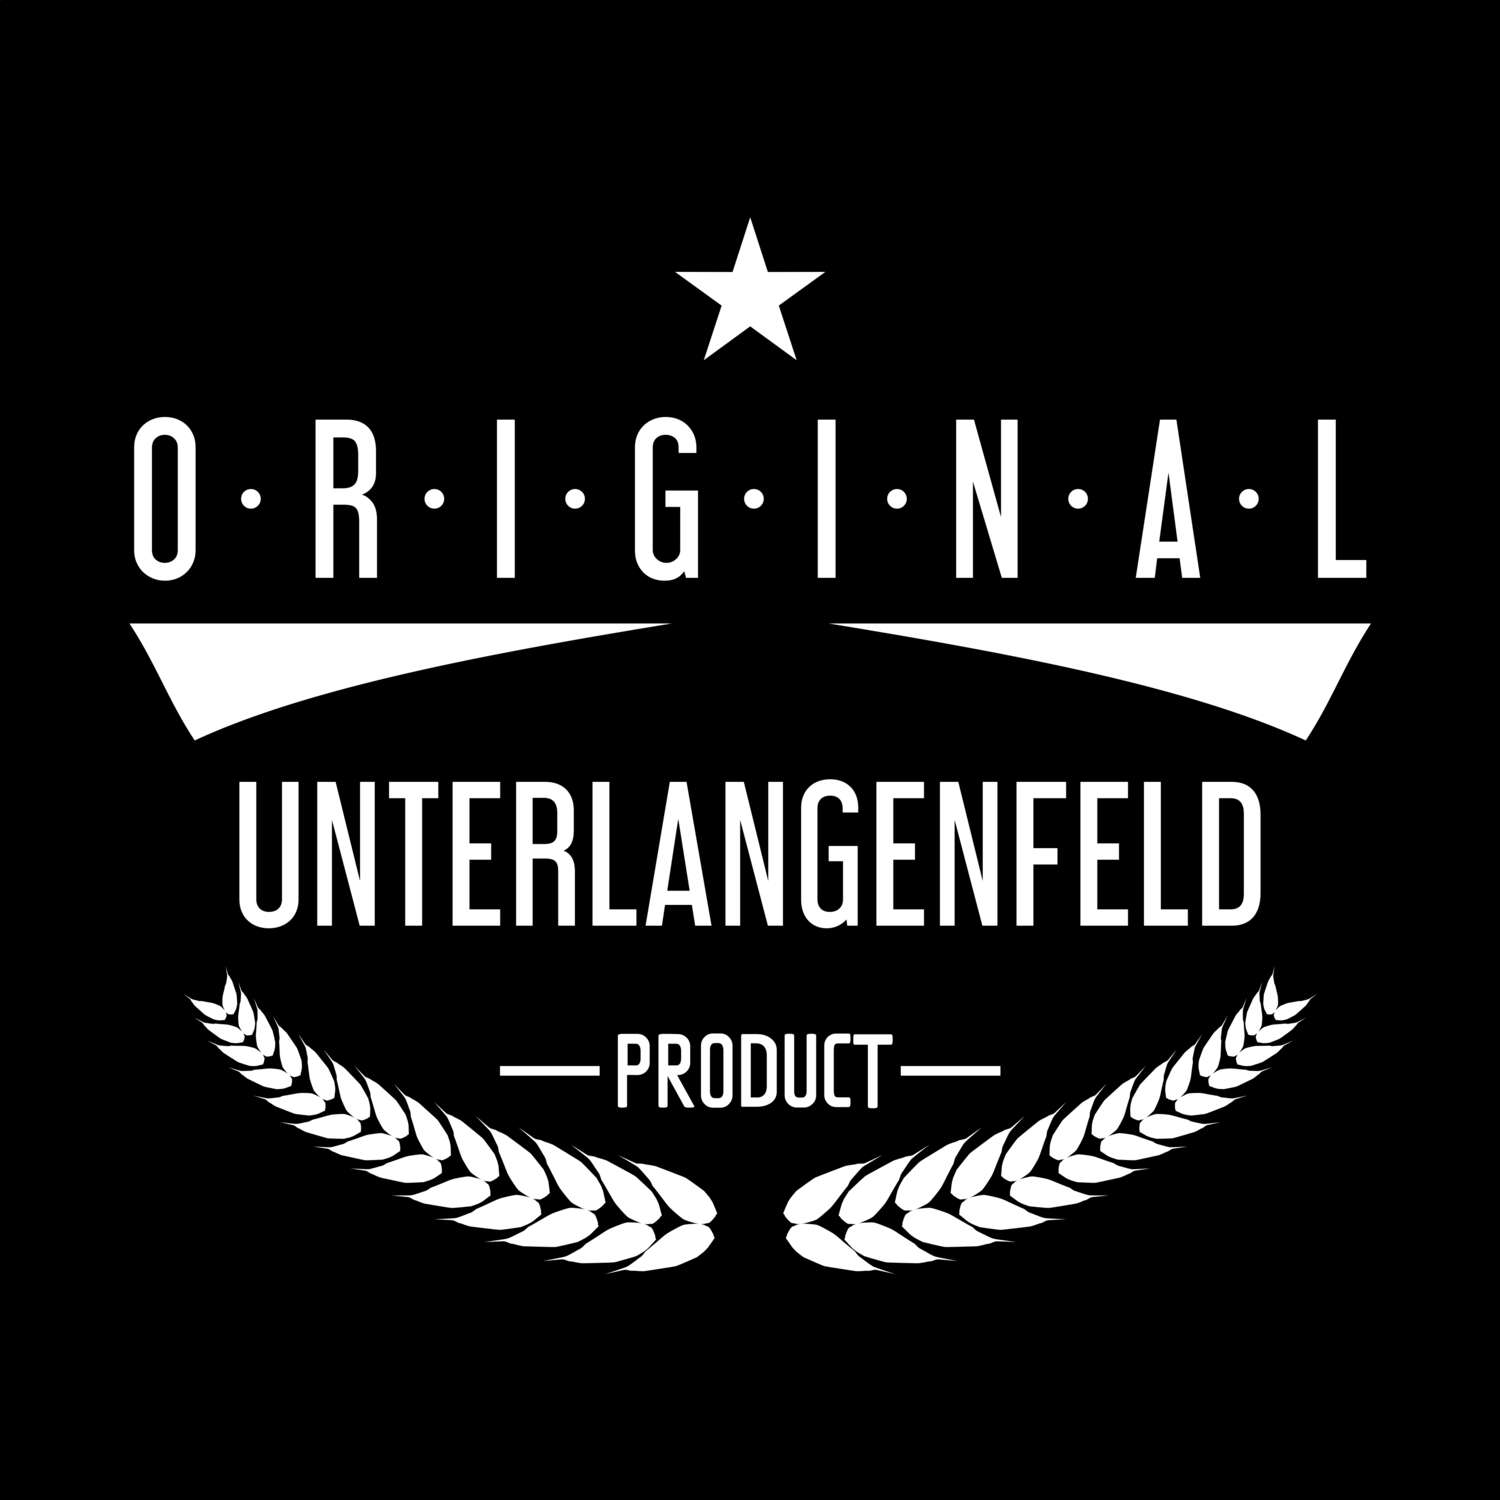 Unterlangenfeld T-Shirt »Original Product«